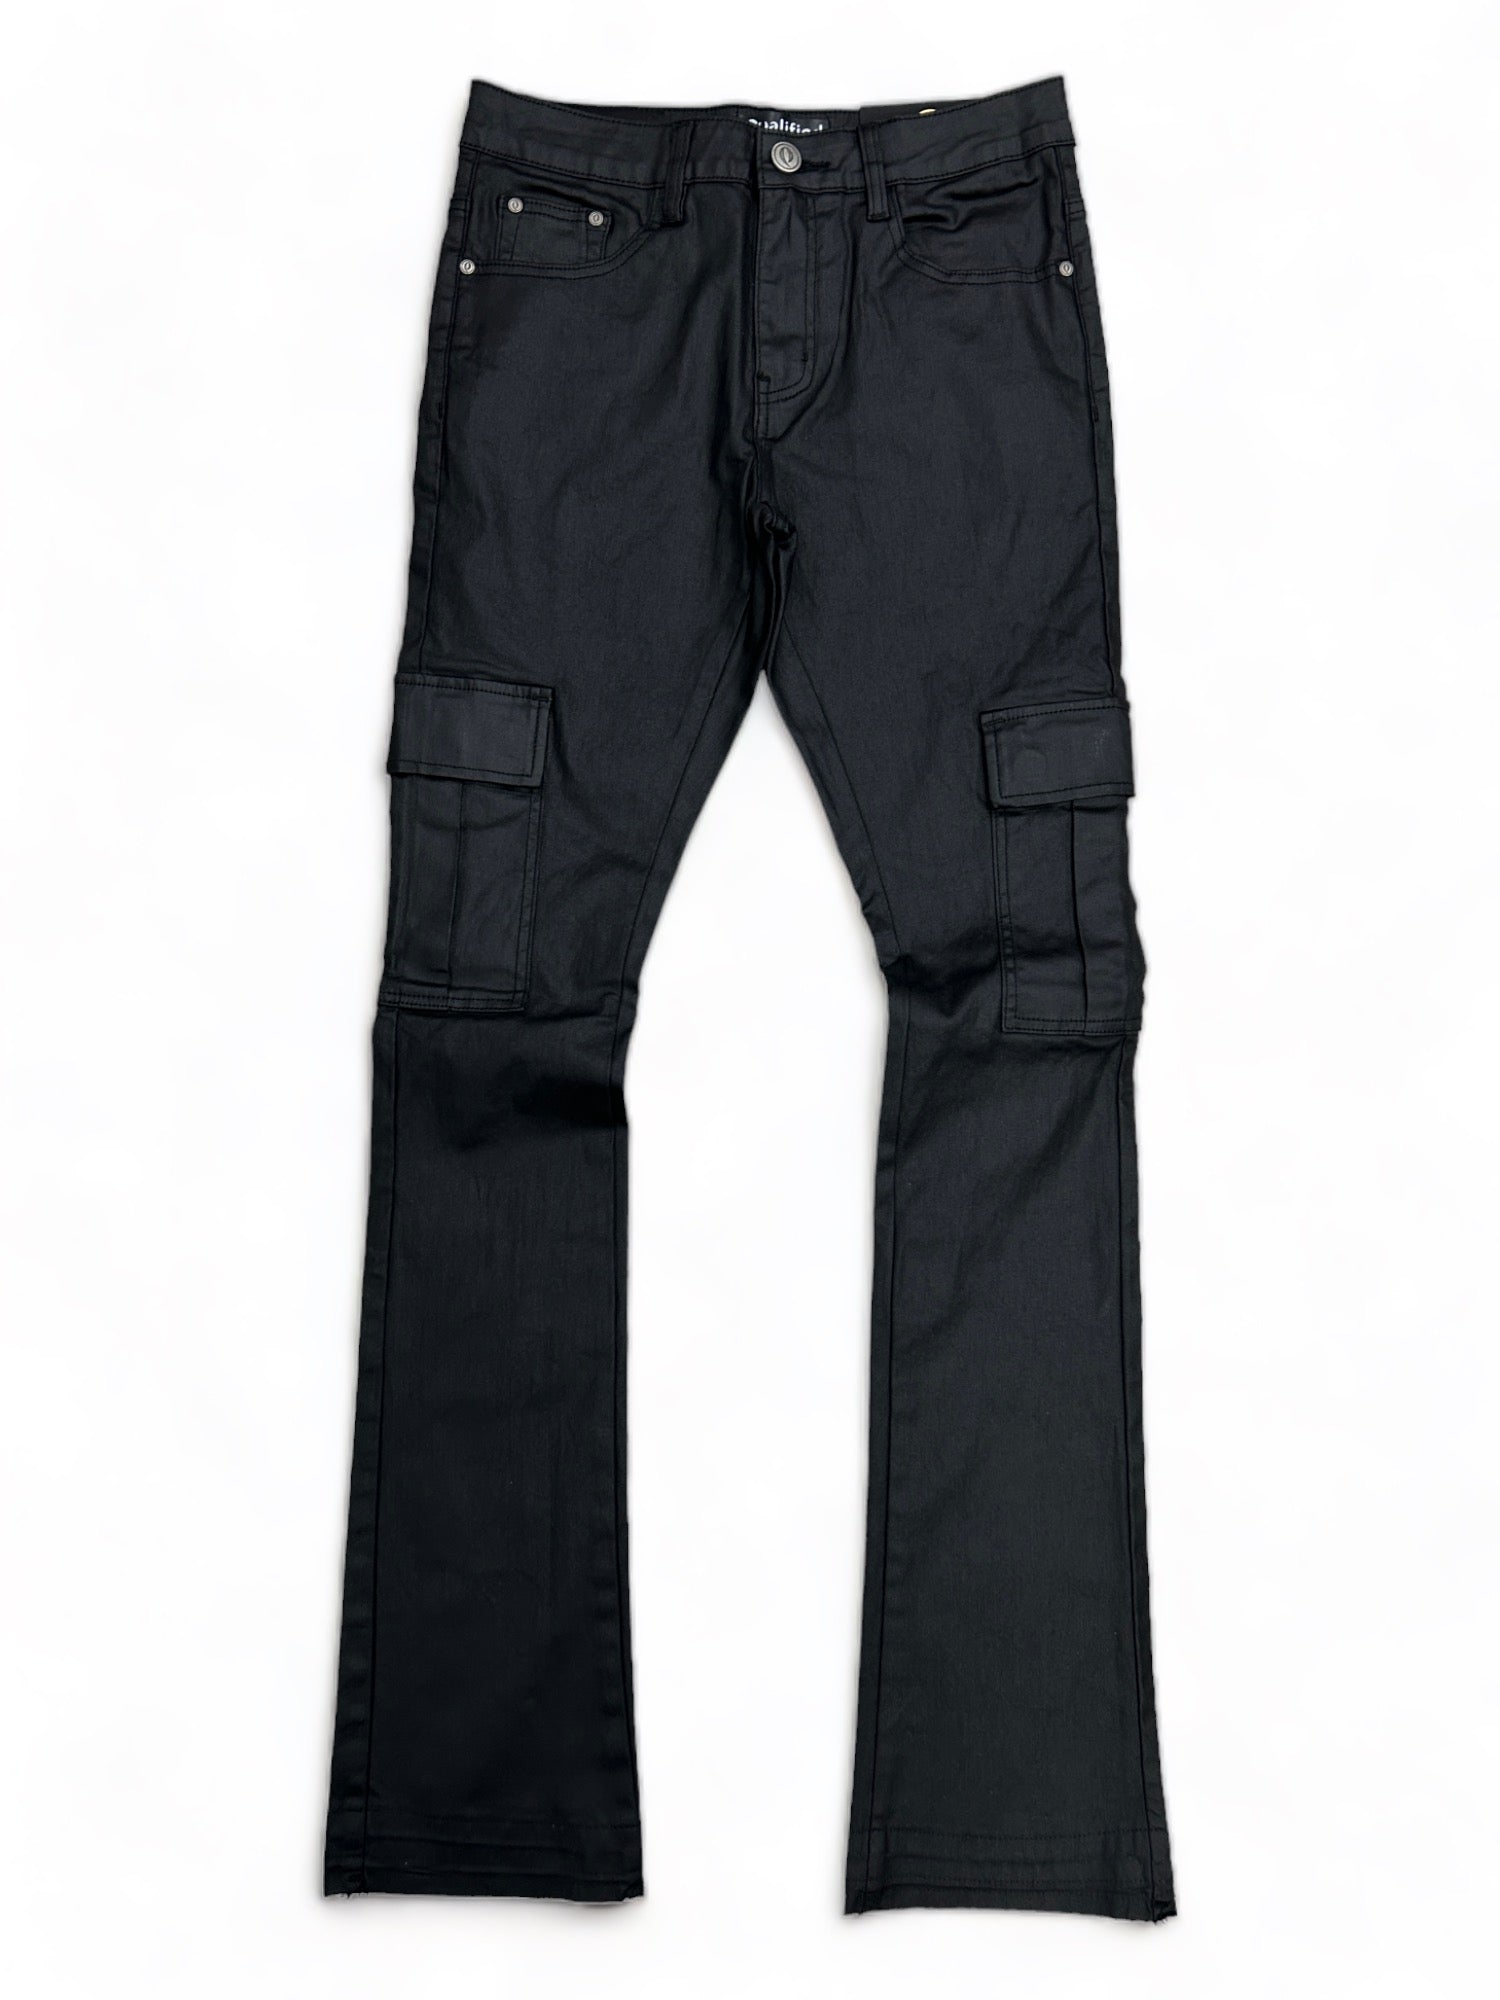 Qualified Denim Premium Wax Coated Cargo Stacked Pants